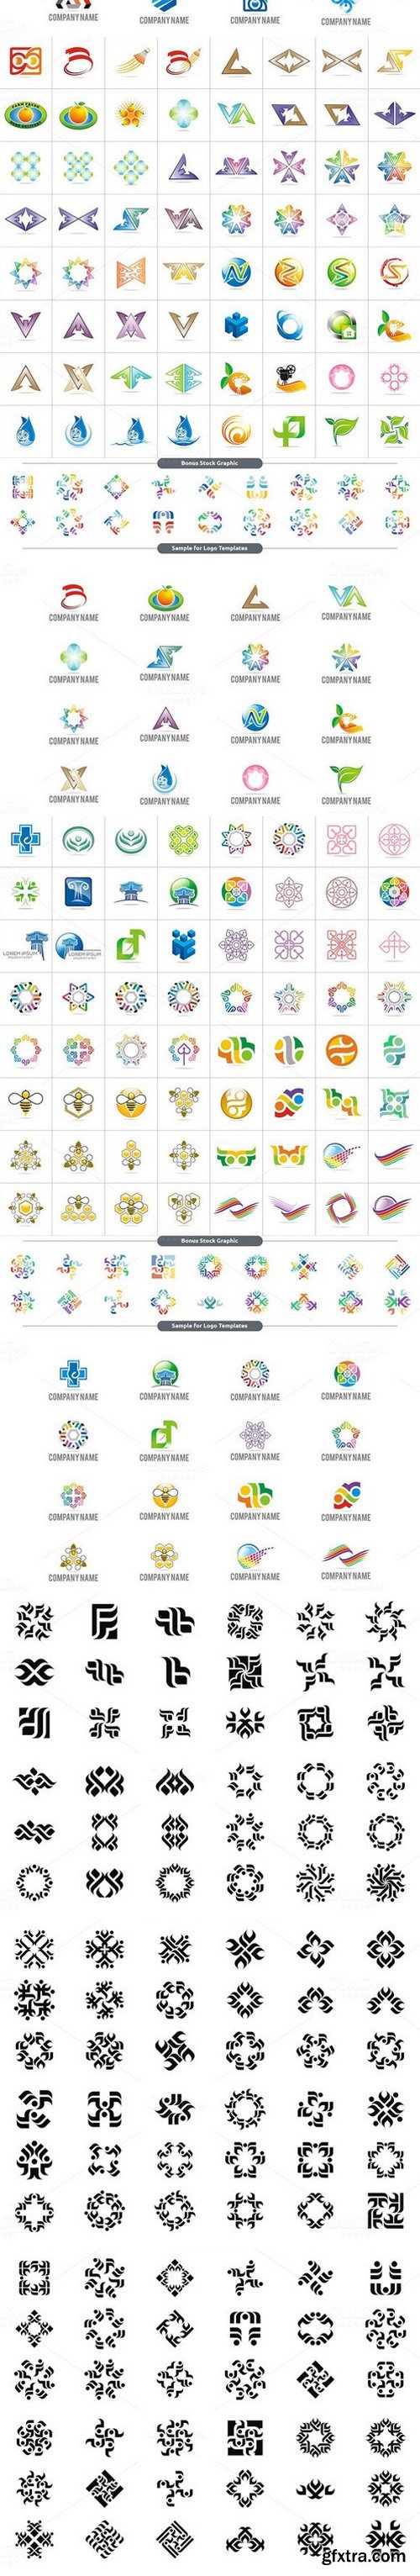 1000 Logos Stock Graphic